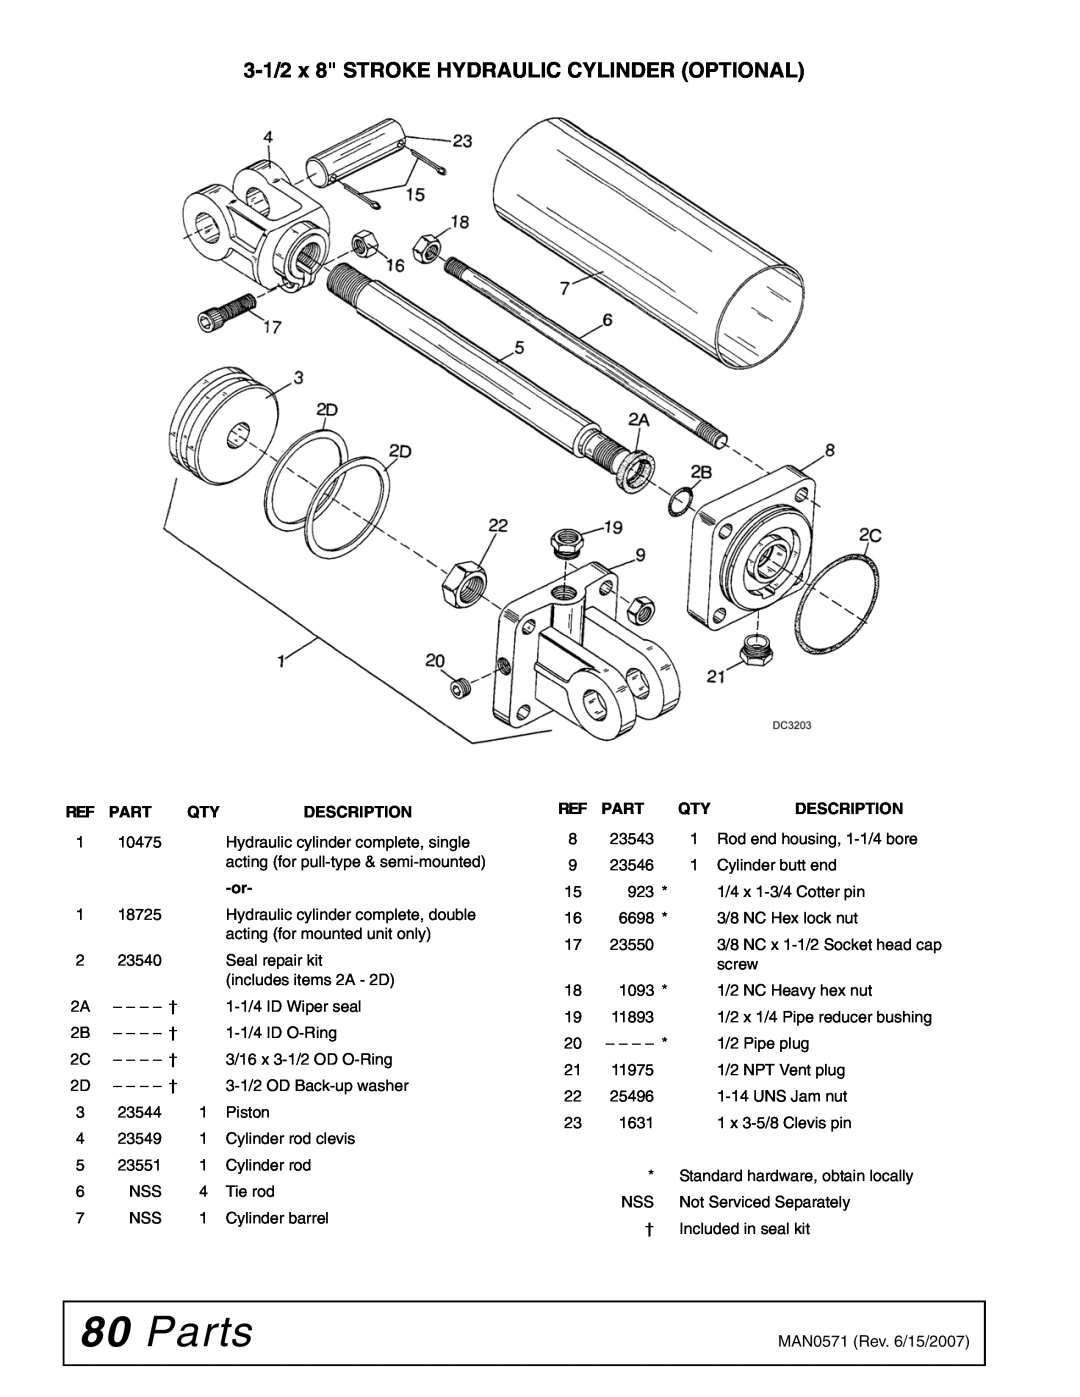 Woods Equipment DSO1260Q, DS1440Q, DS1260Q manual Parts, 3-1/2 x 8 STROKE HYDRAULIC CYLINDER OPTIONAL, Description 